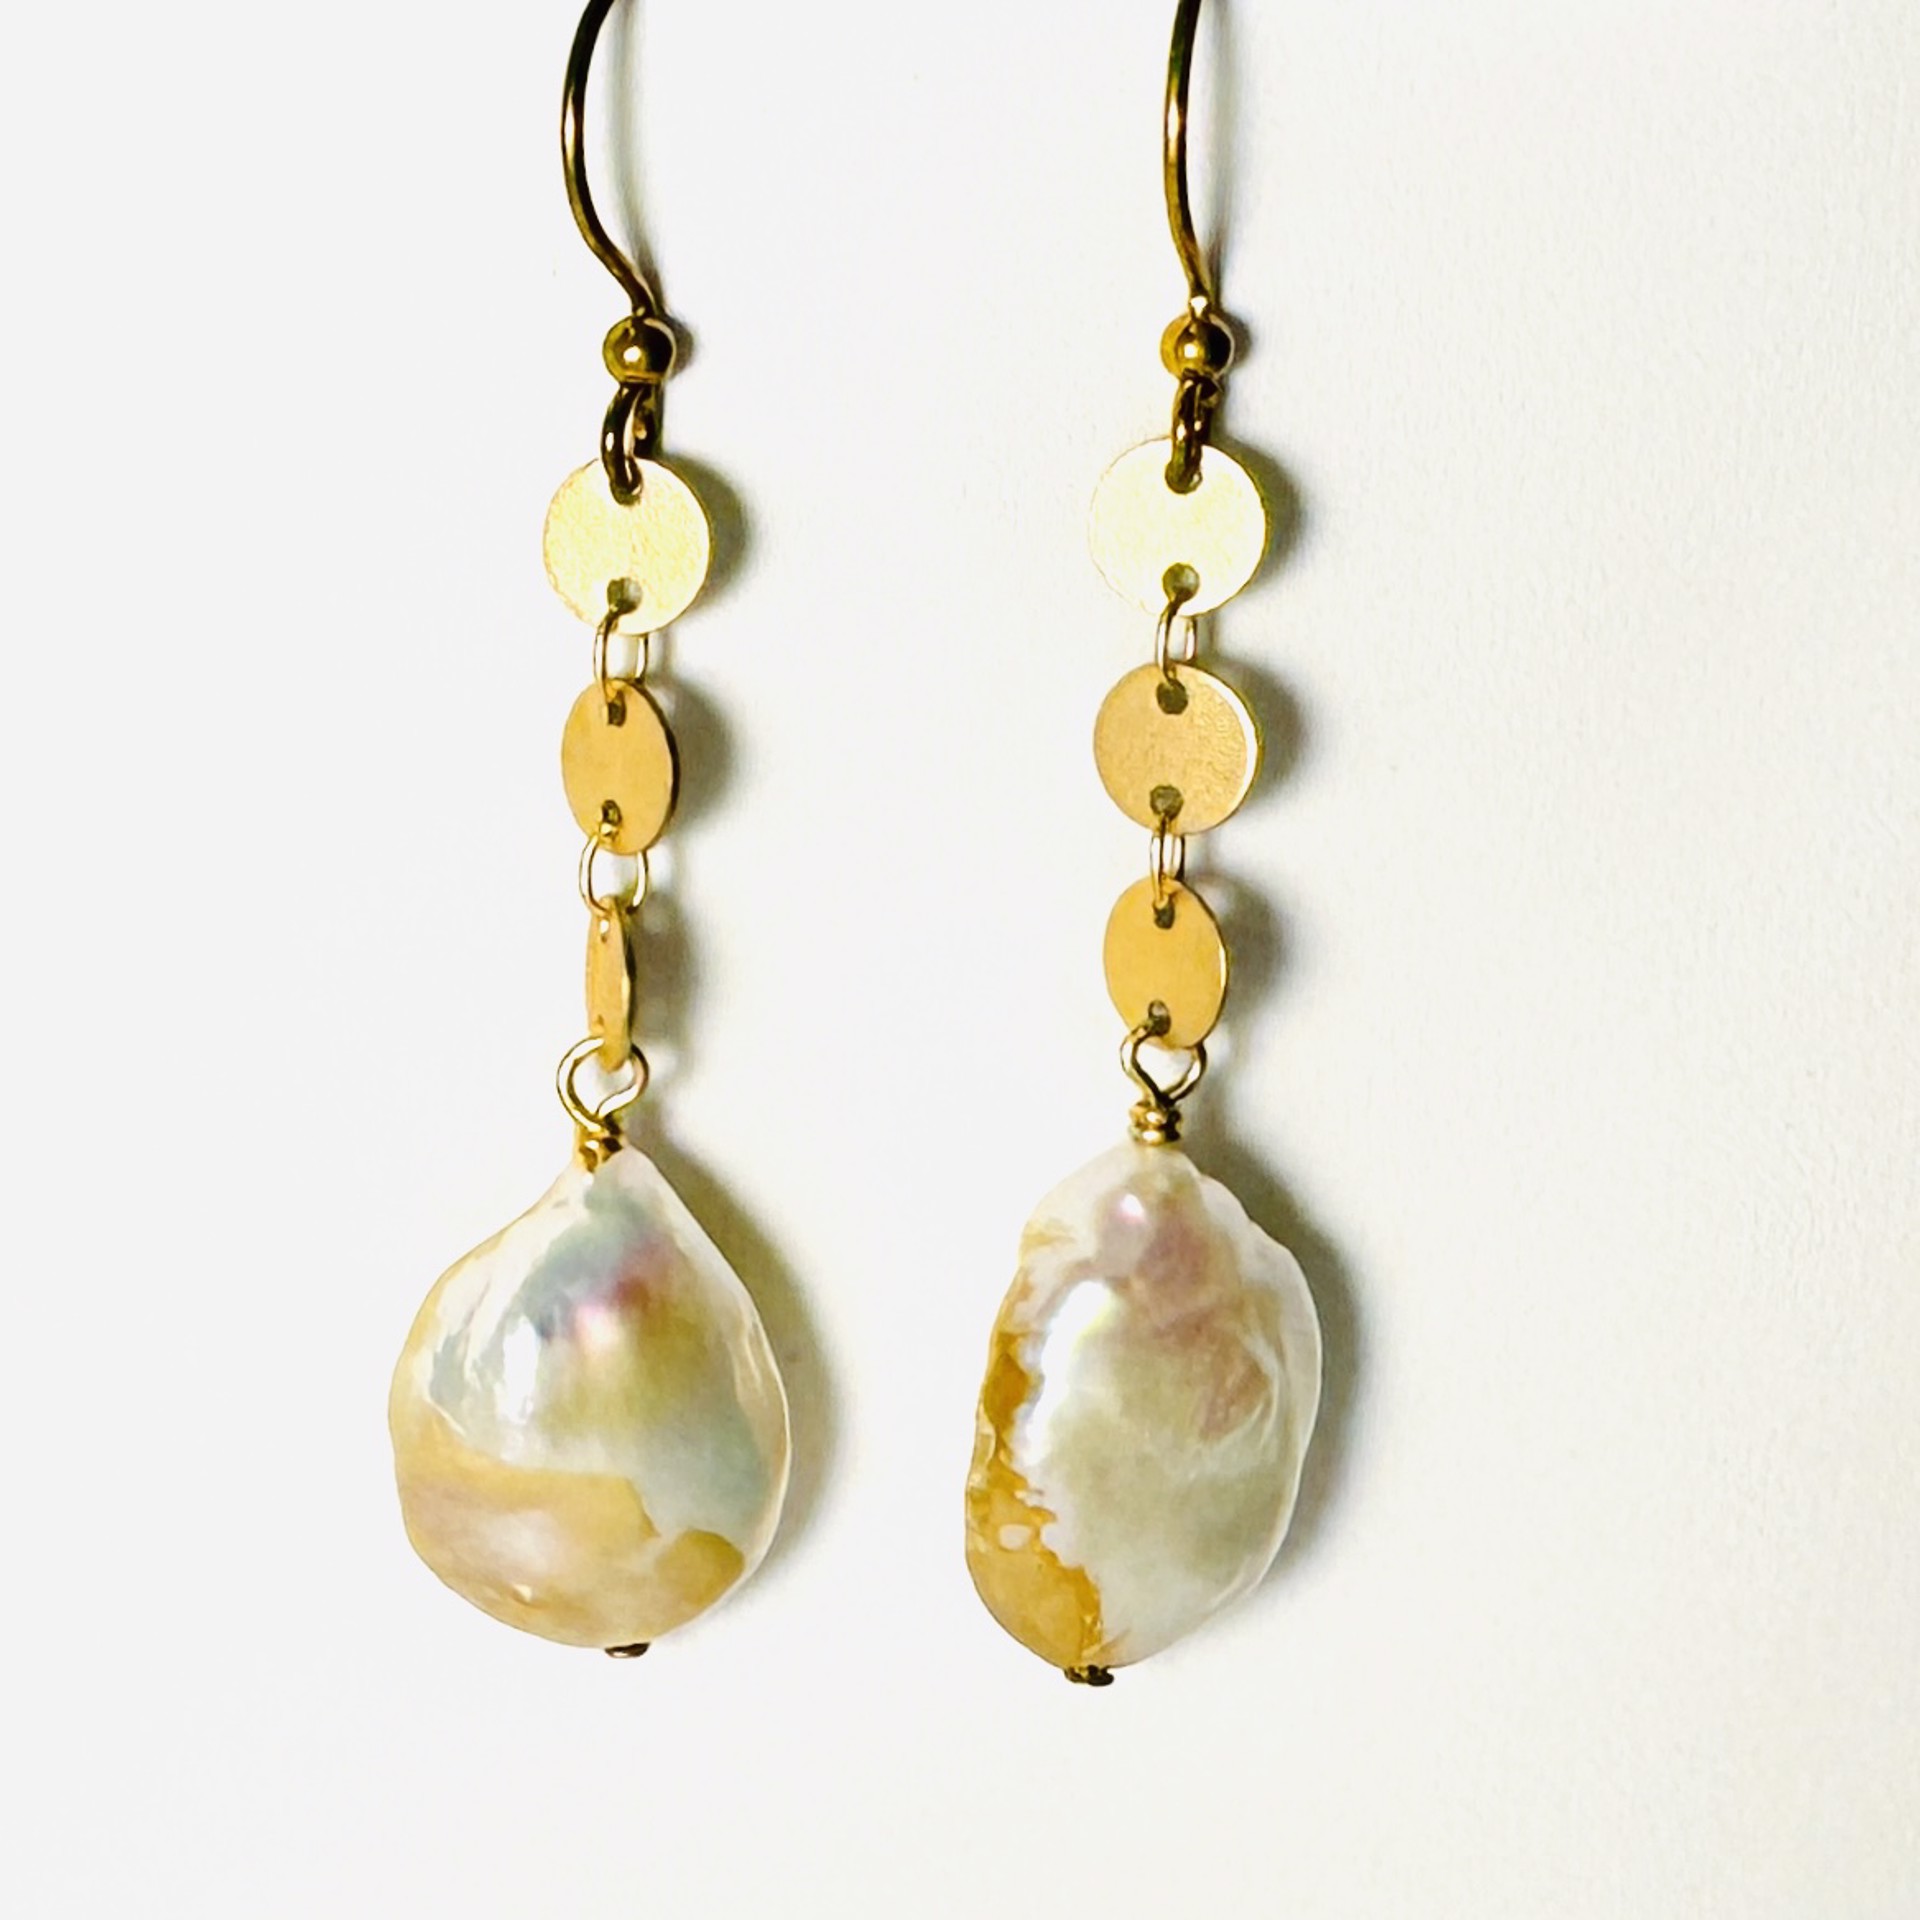 Baroque Pearl, Matte 14k gp Chain Earrings LR24-36 by Legare Riano